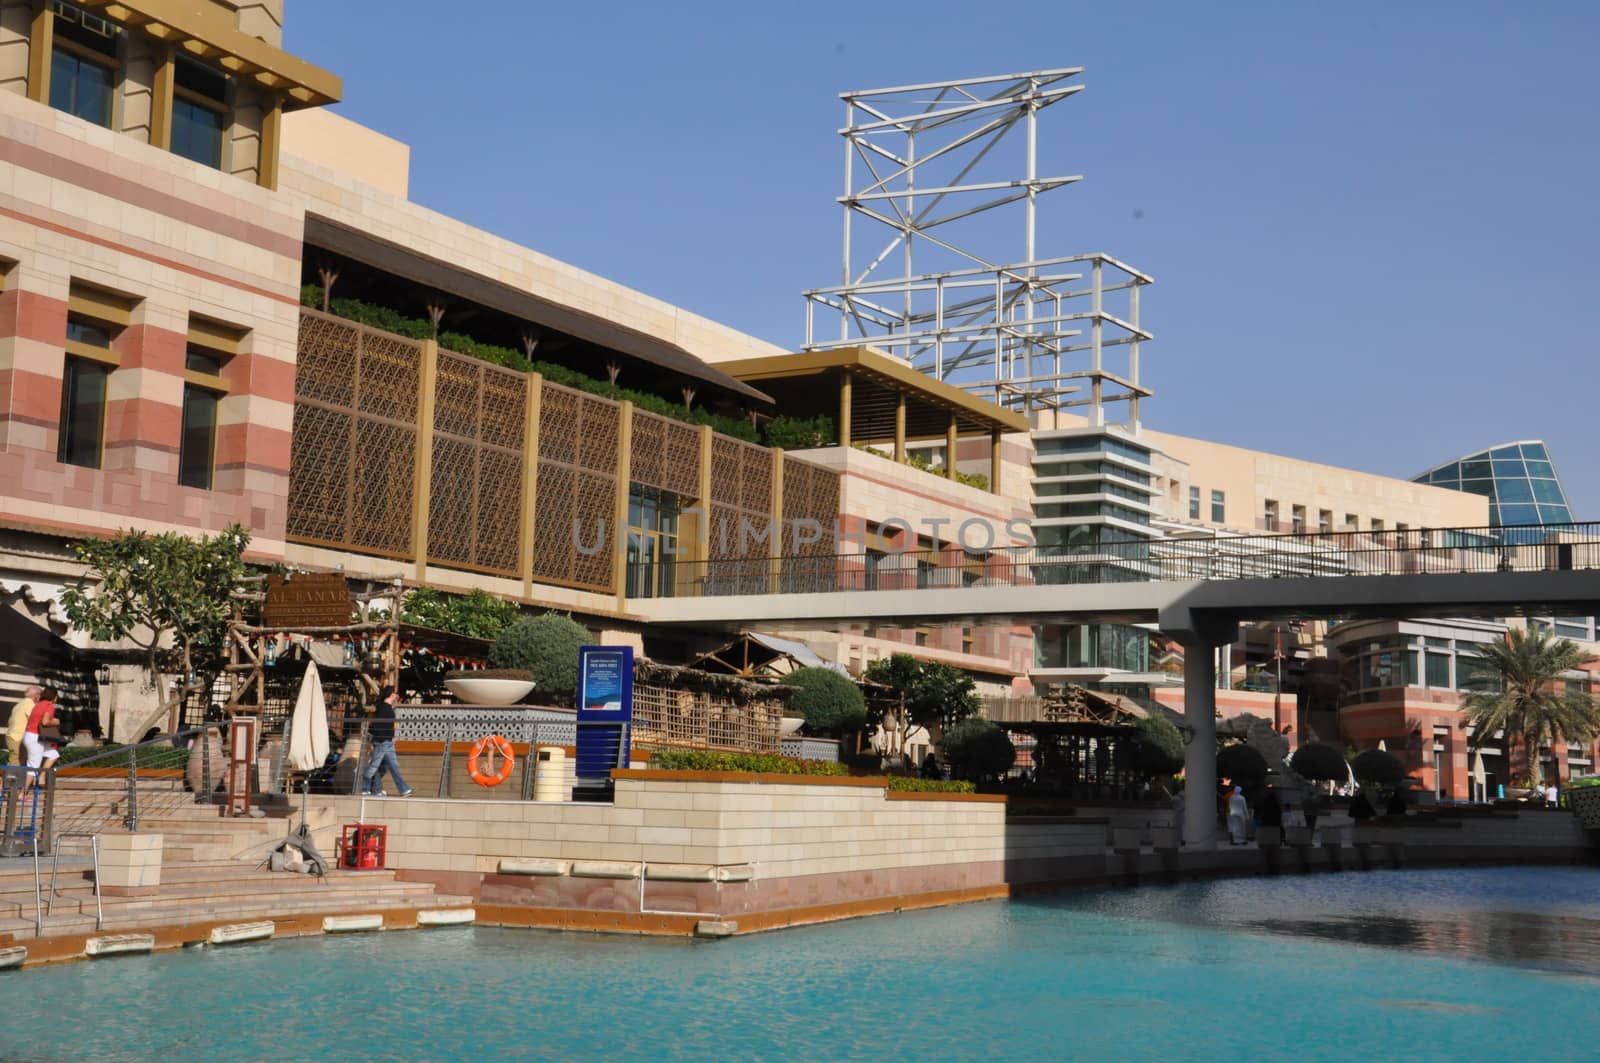 Festival Centre Waterfront in Dubai, UAE by sainaniritu